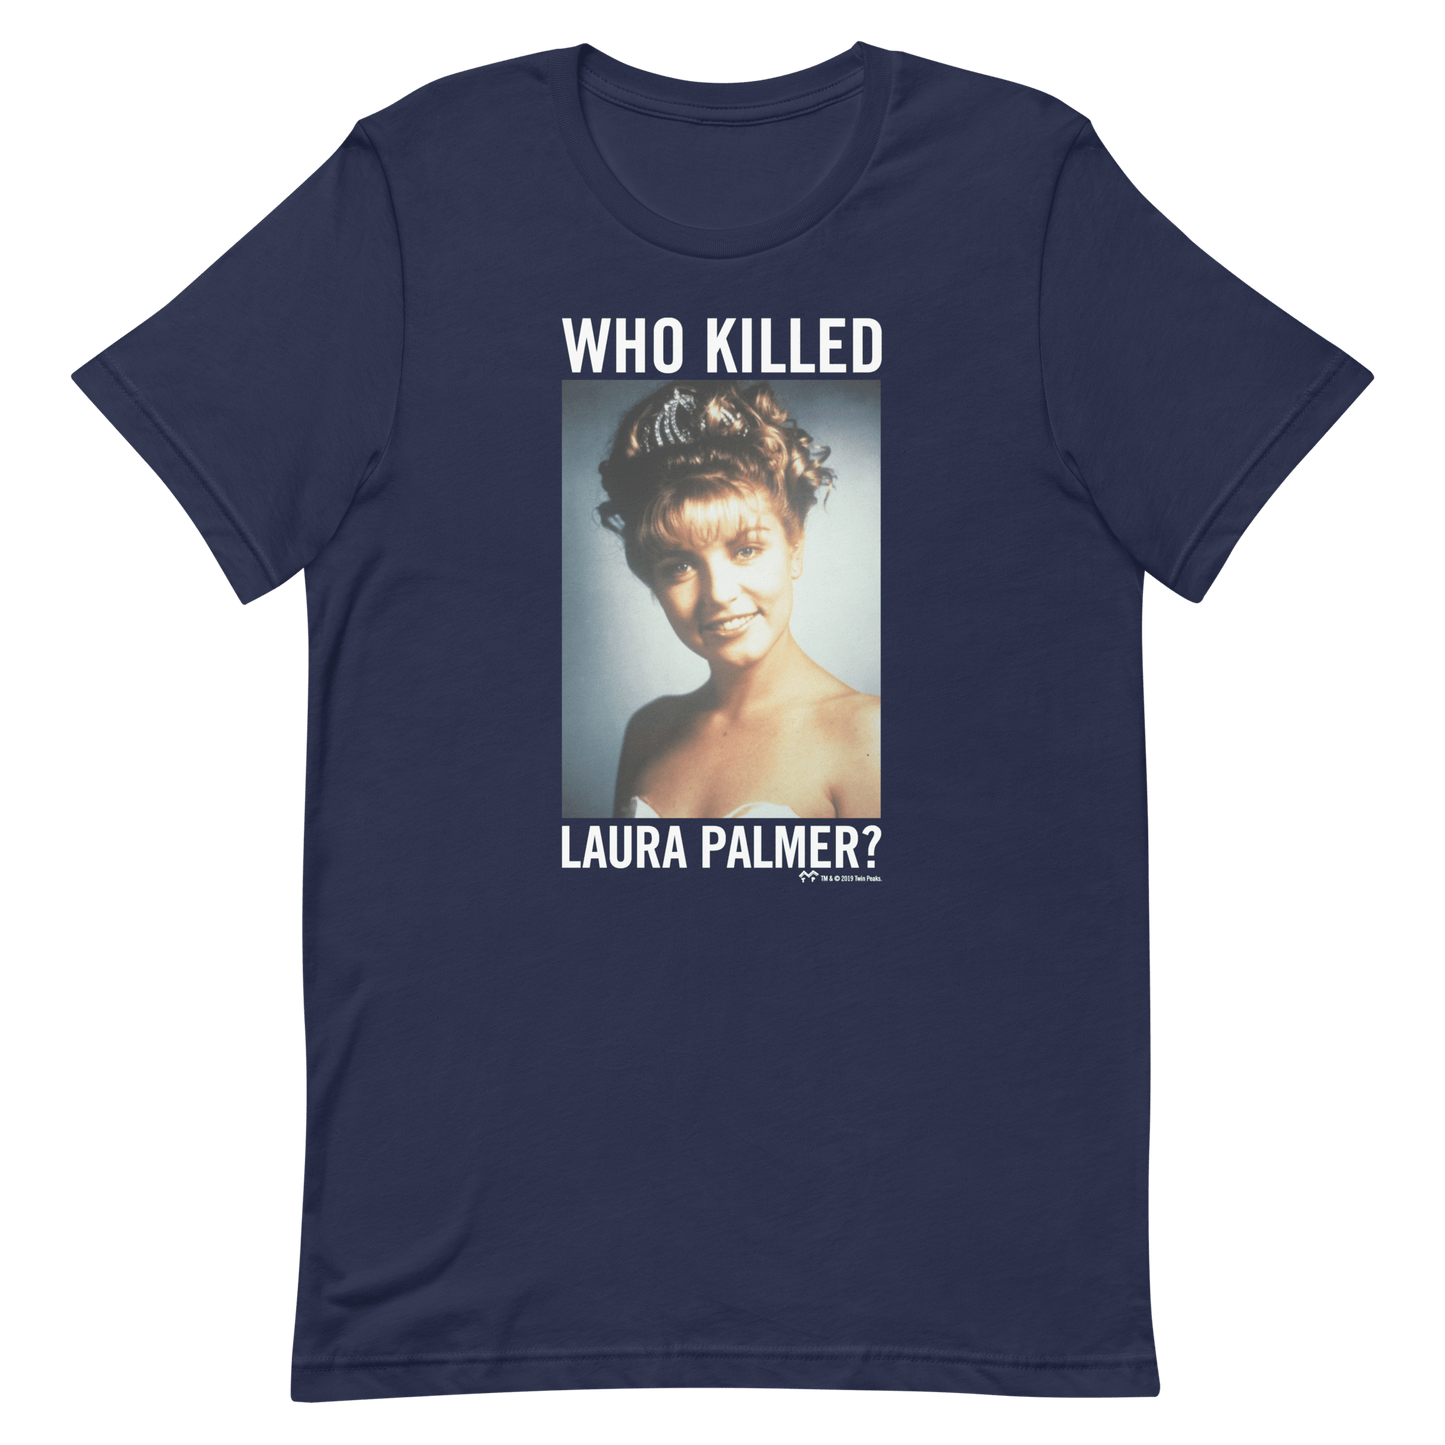 Twin Peaks Who Killed Laura Palmer? Adult Short Sleeve T - Shirt - Paramount Shop